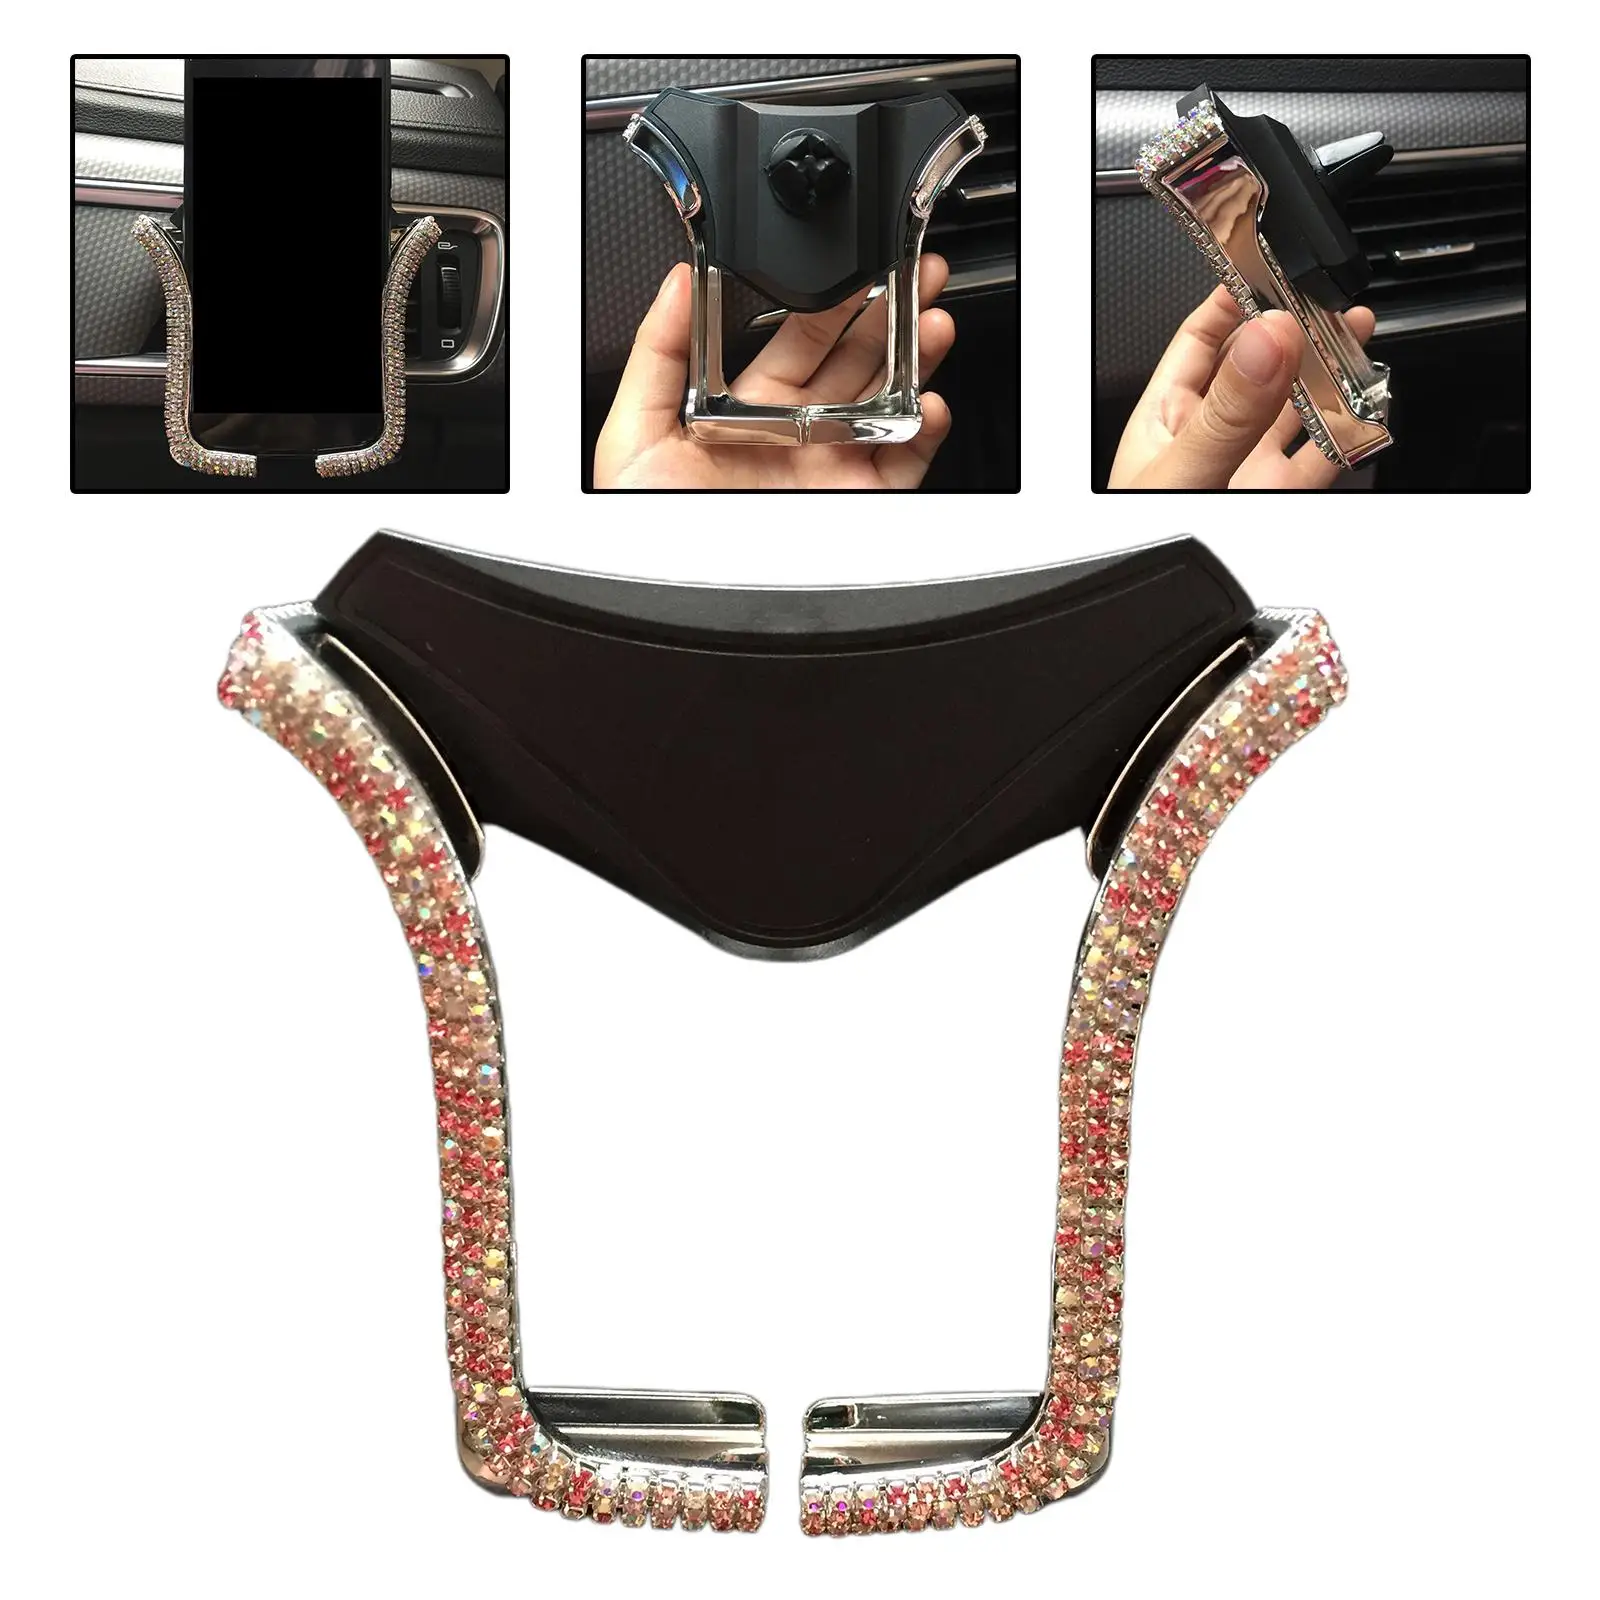 Stylish Bling Car Phone Holder, Clip with Crystal Rhinestone